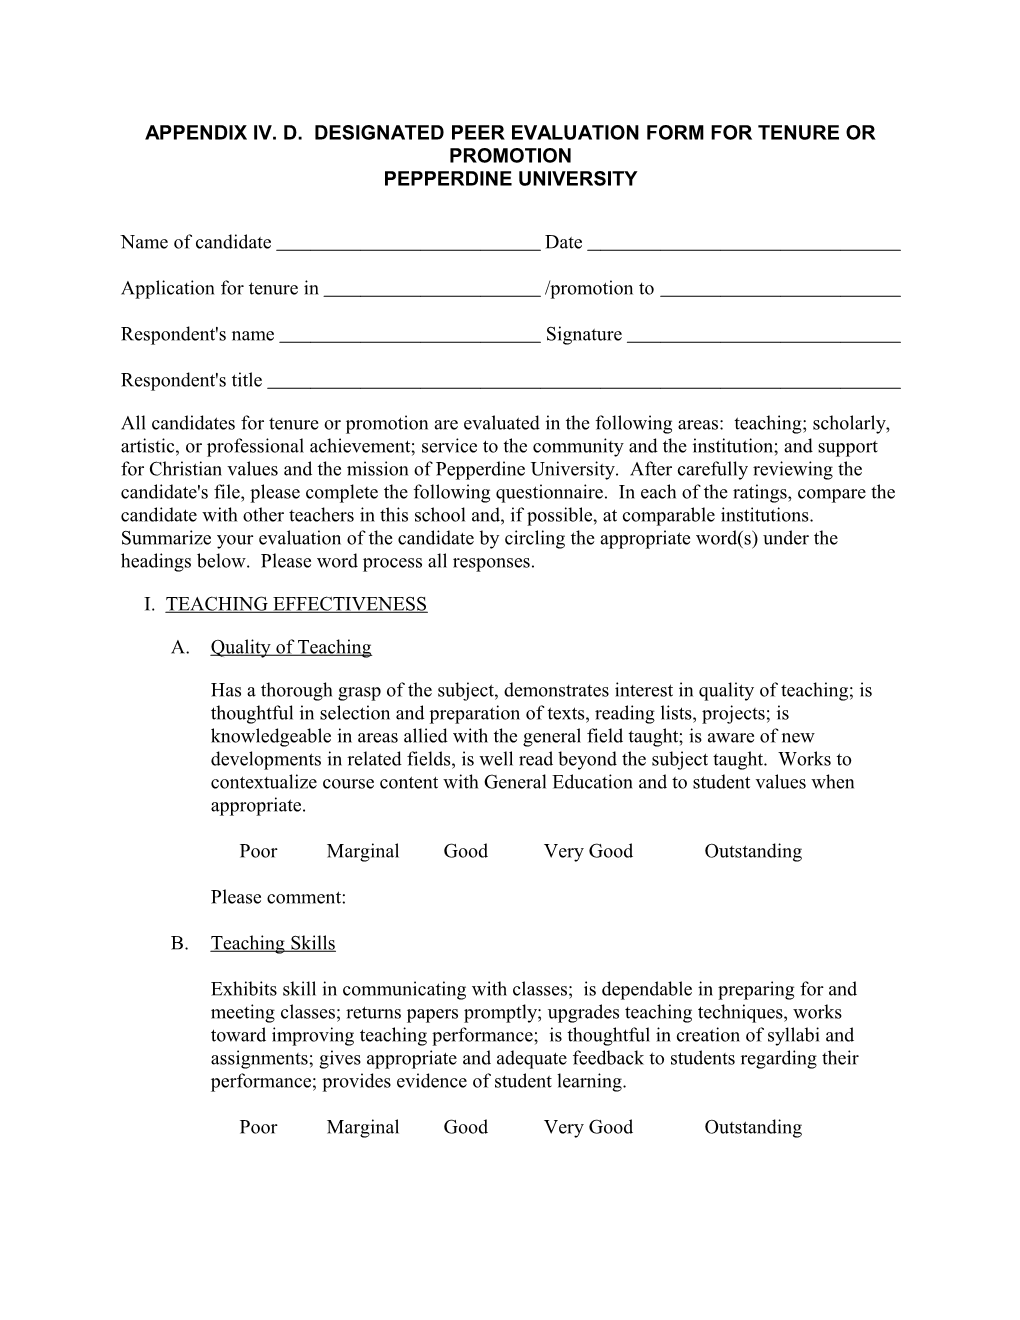 Appendix Iv. D. Designated Peer Evaluation Form for Tenure Or Promotion